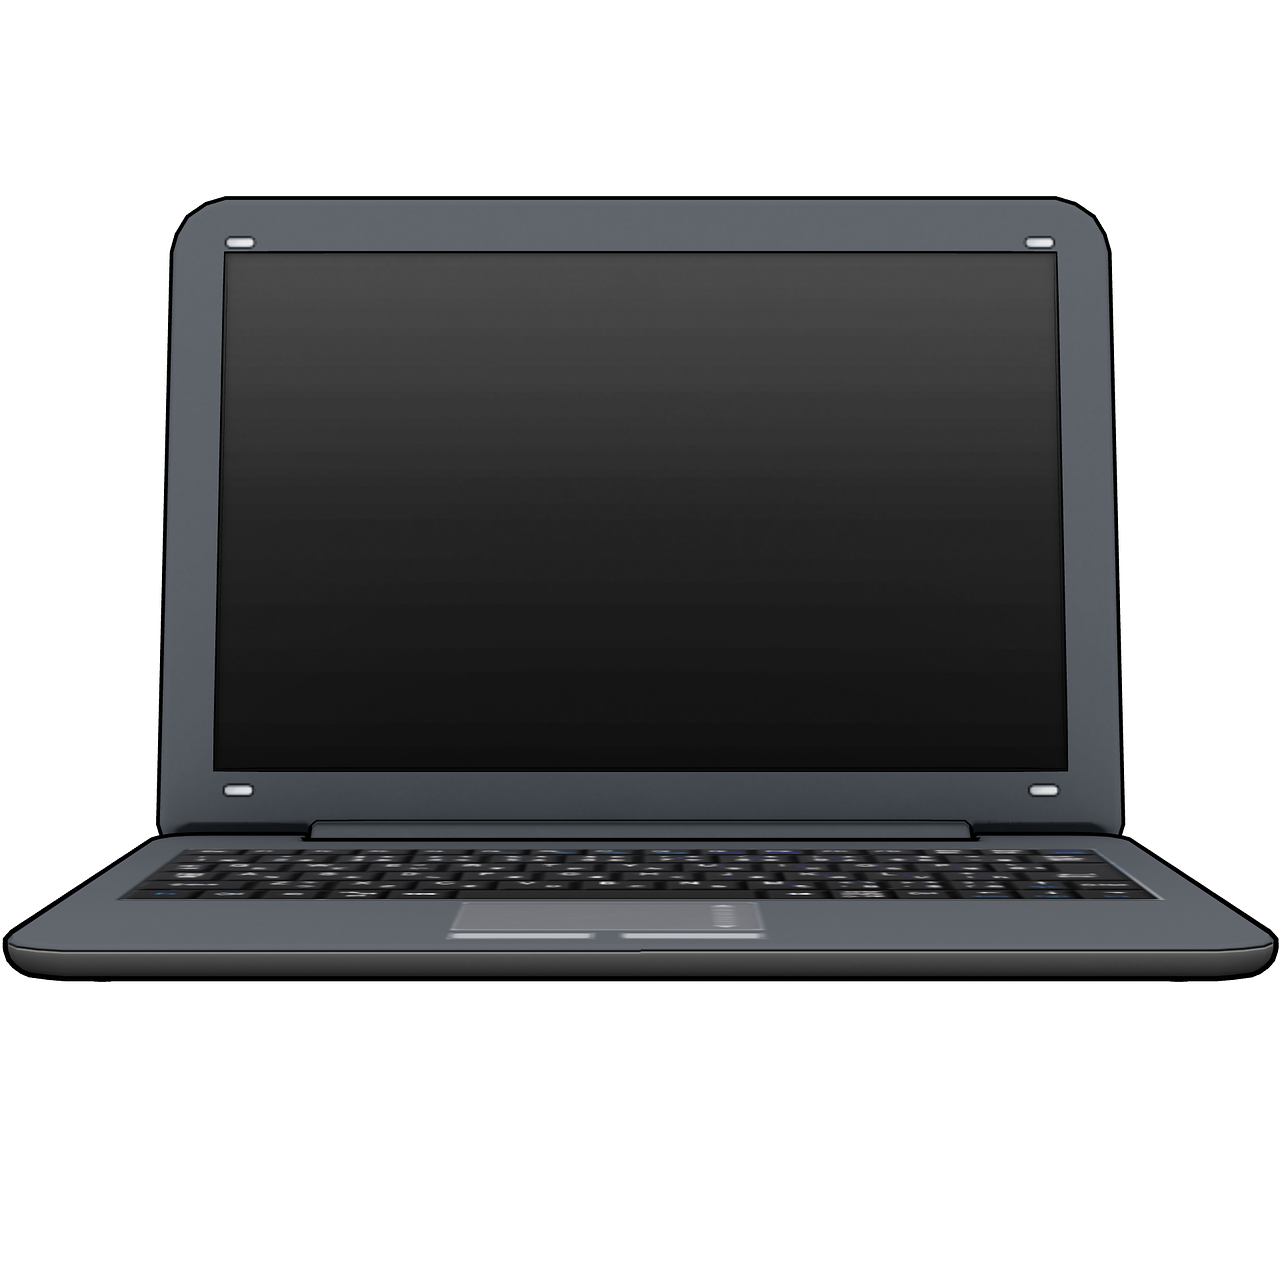 Ноутбук картинка. Компьютер Laptop-0o74qg60. Открытый ноутбук. Ноутбук без фона. Ноутбук без логотипа.